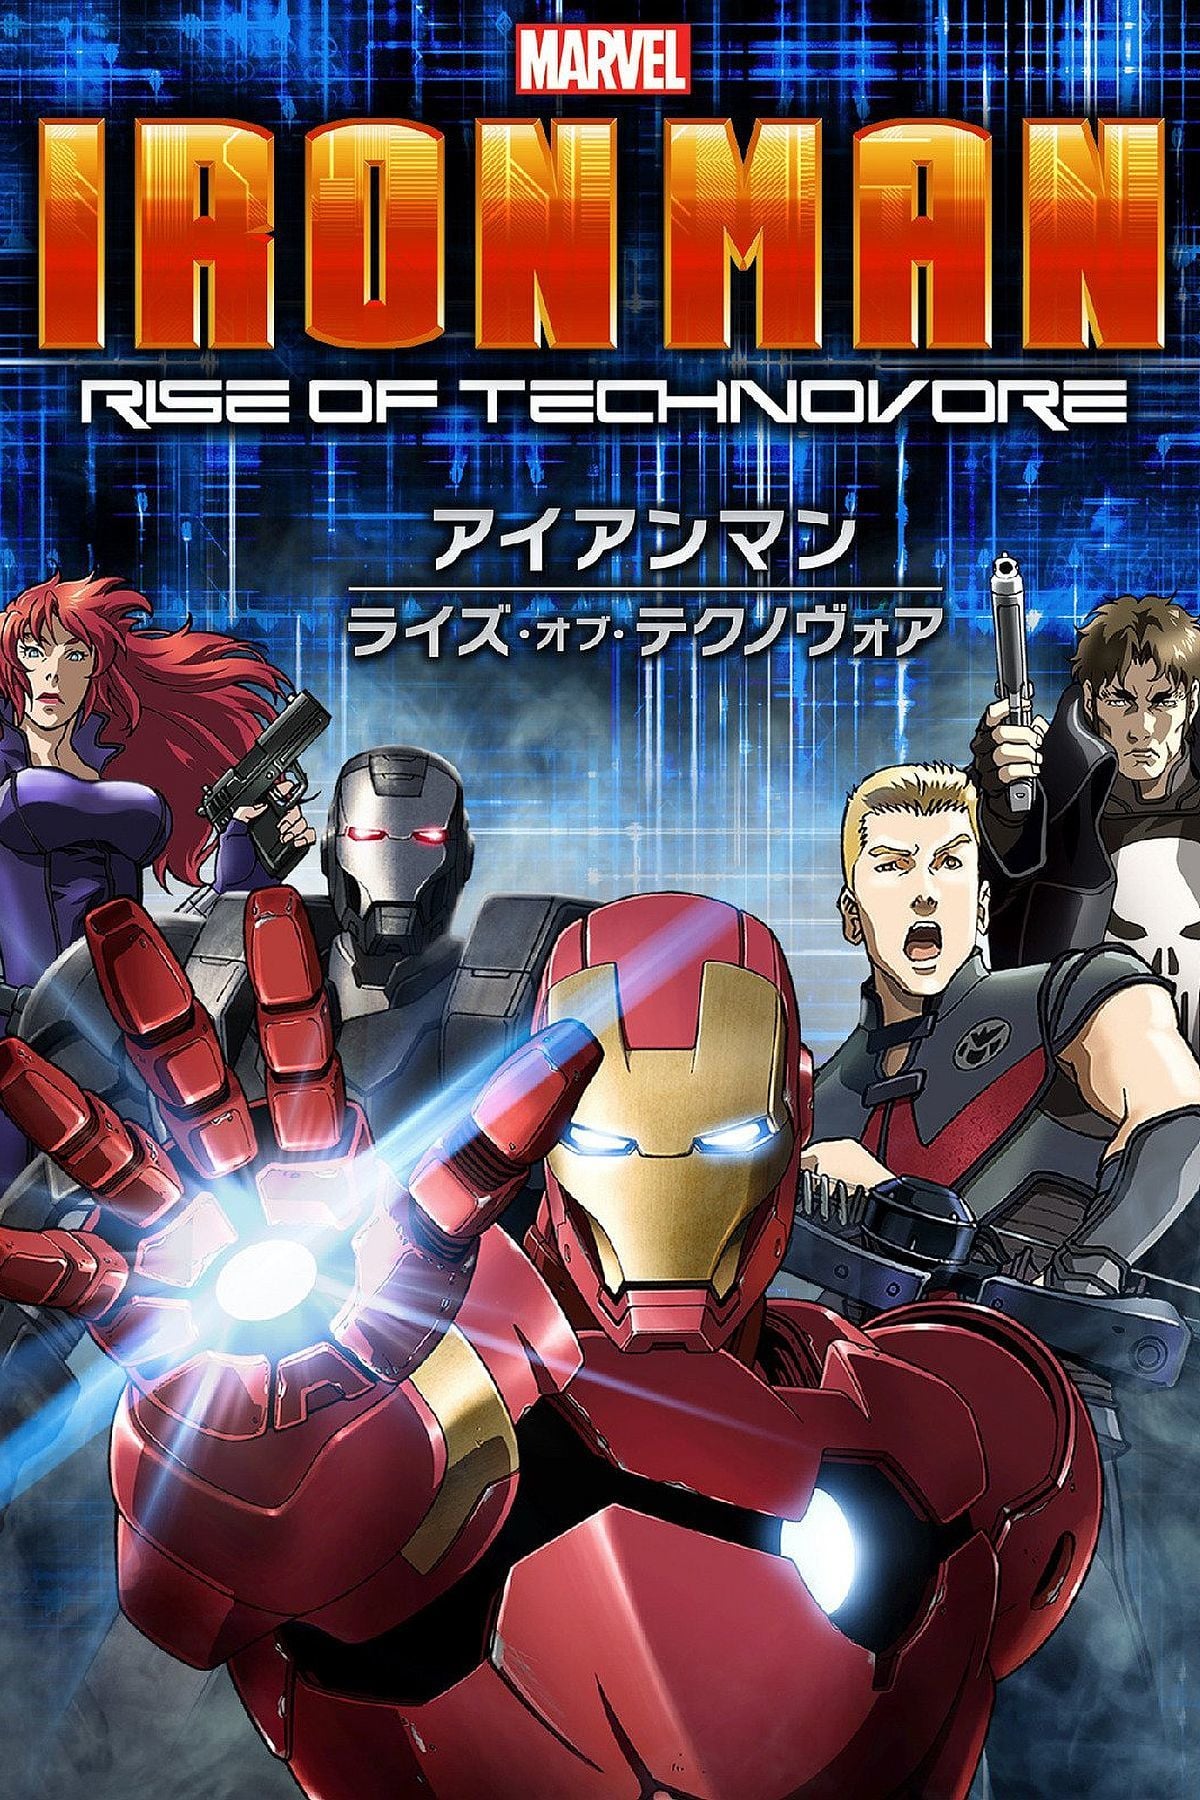 Plakat von "Iron Man: Rise of Technovore"